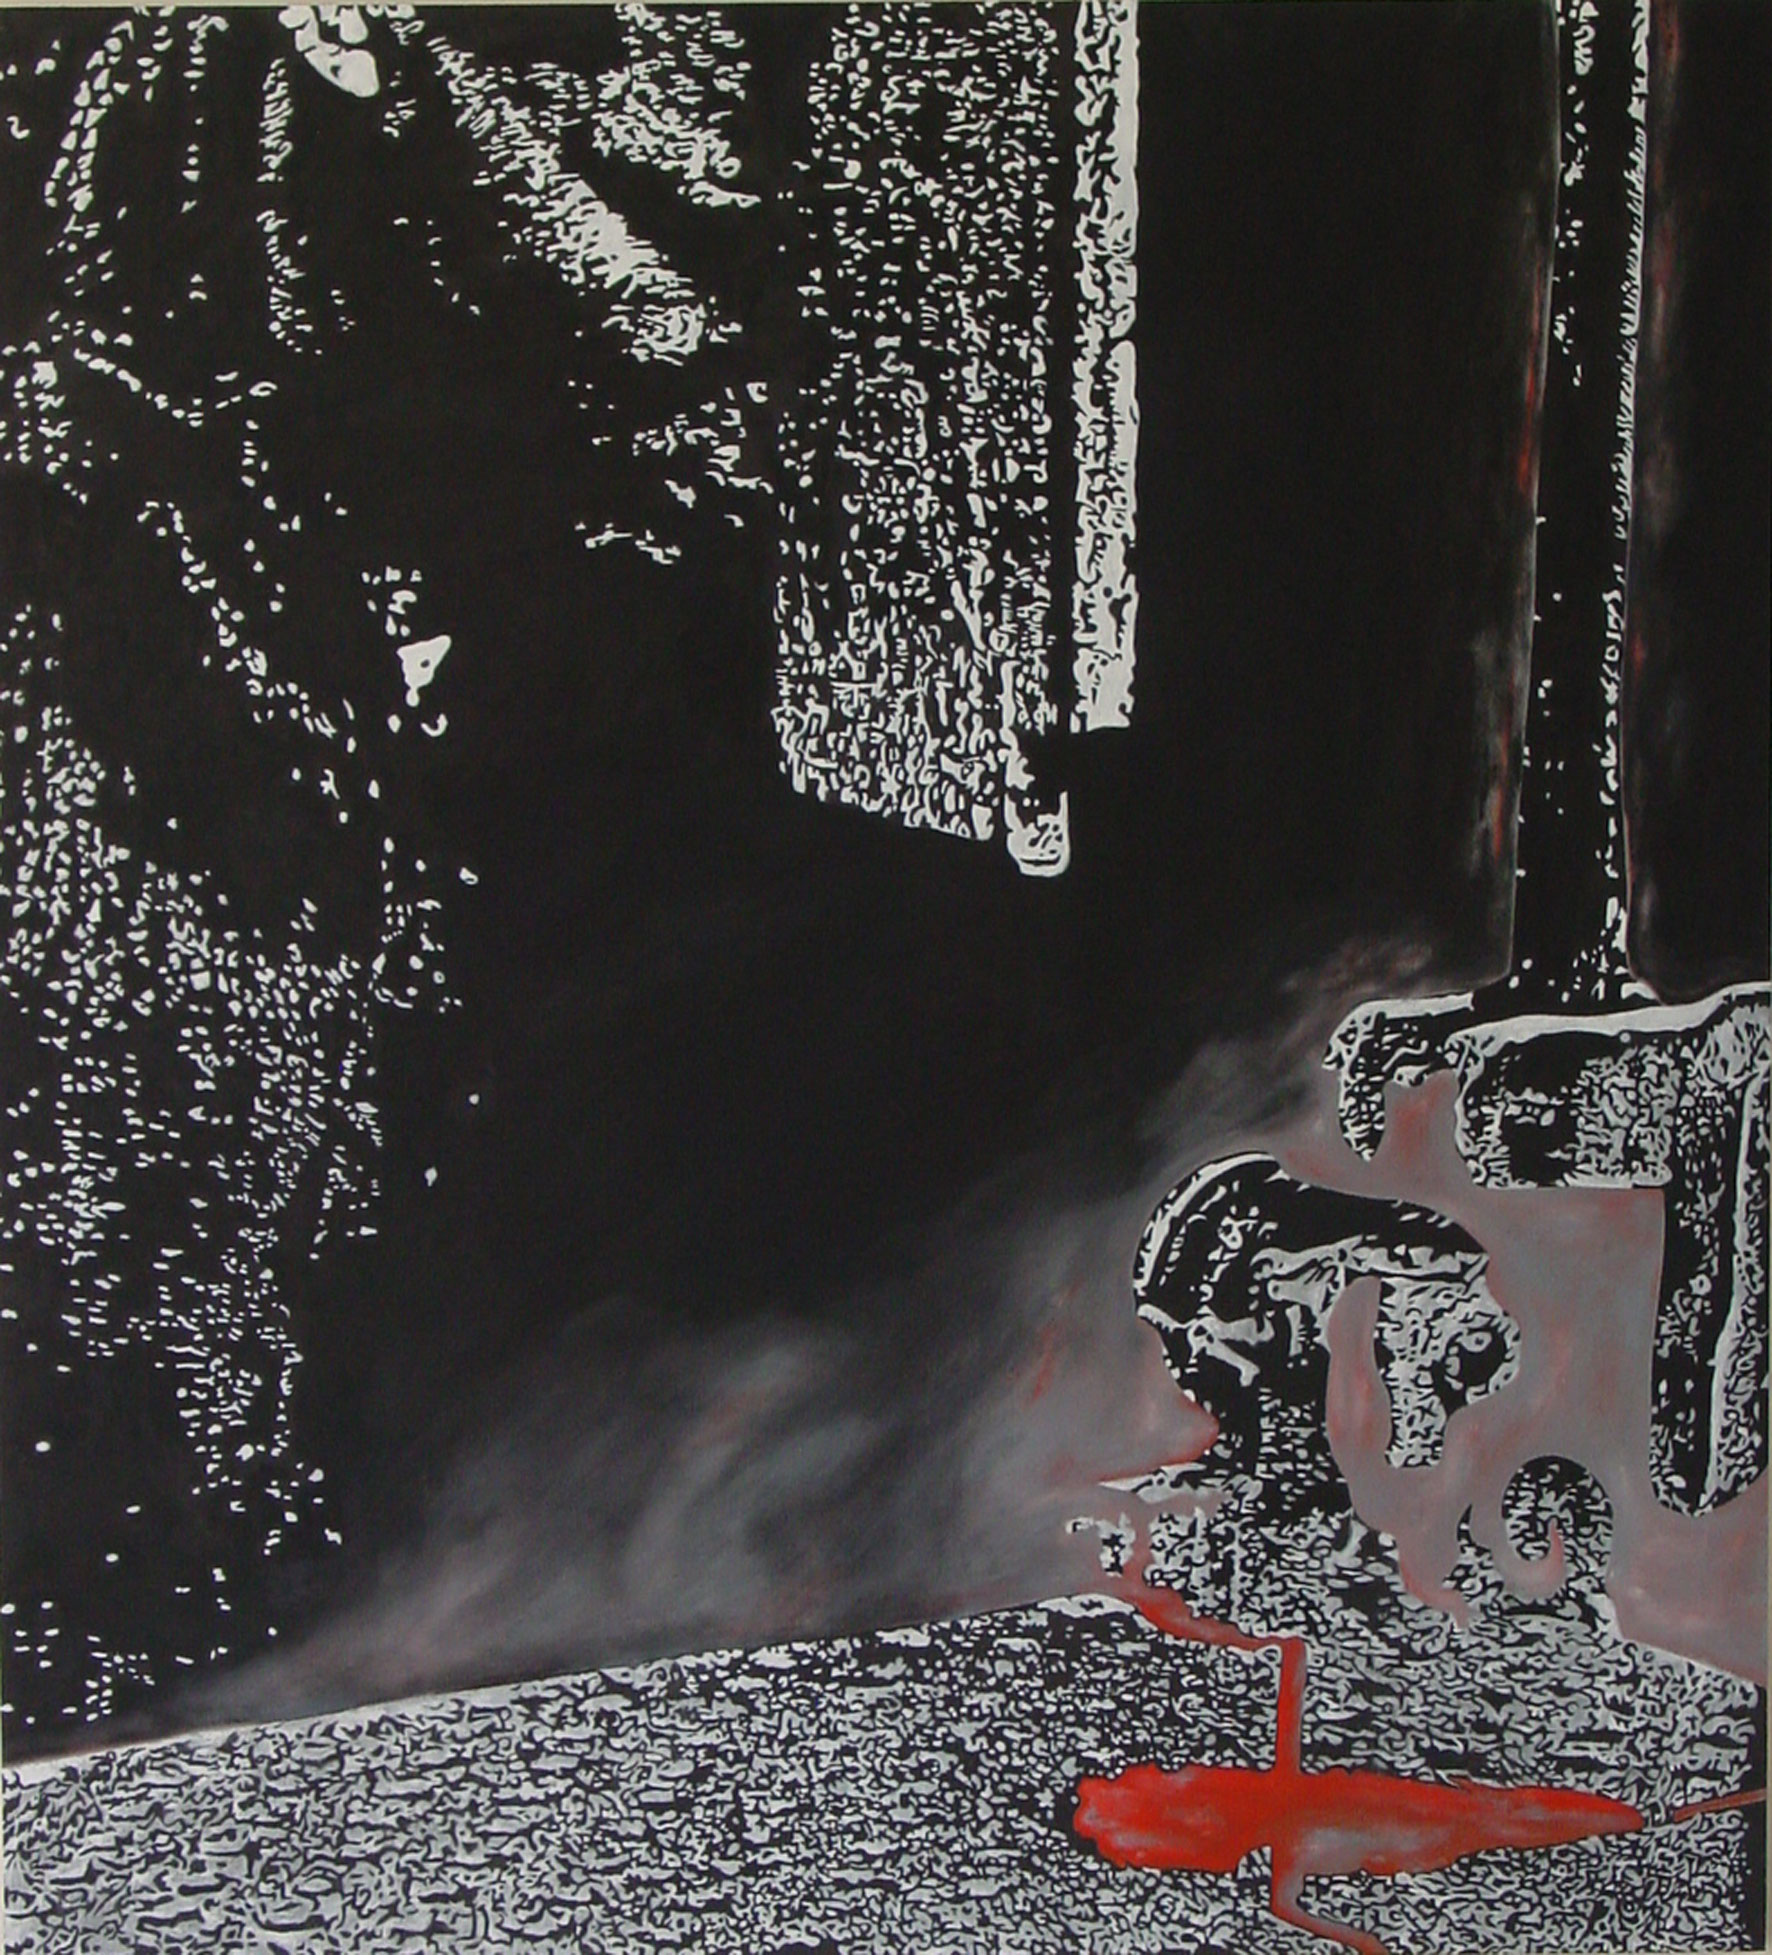 UNTITLED, 2005 / 139 x 153 cm, oil on masonite